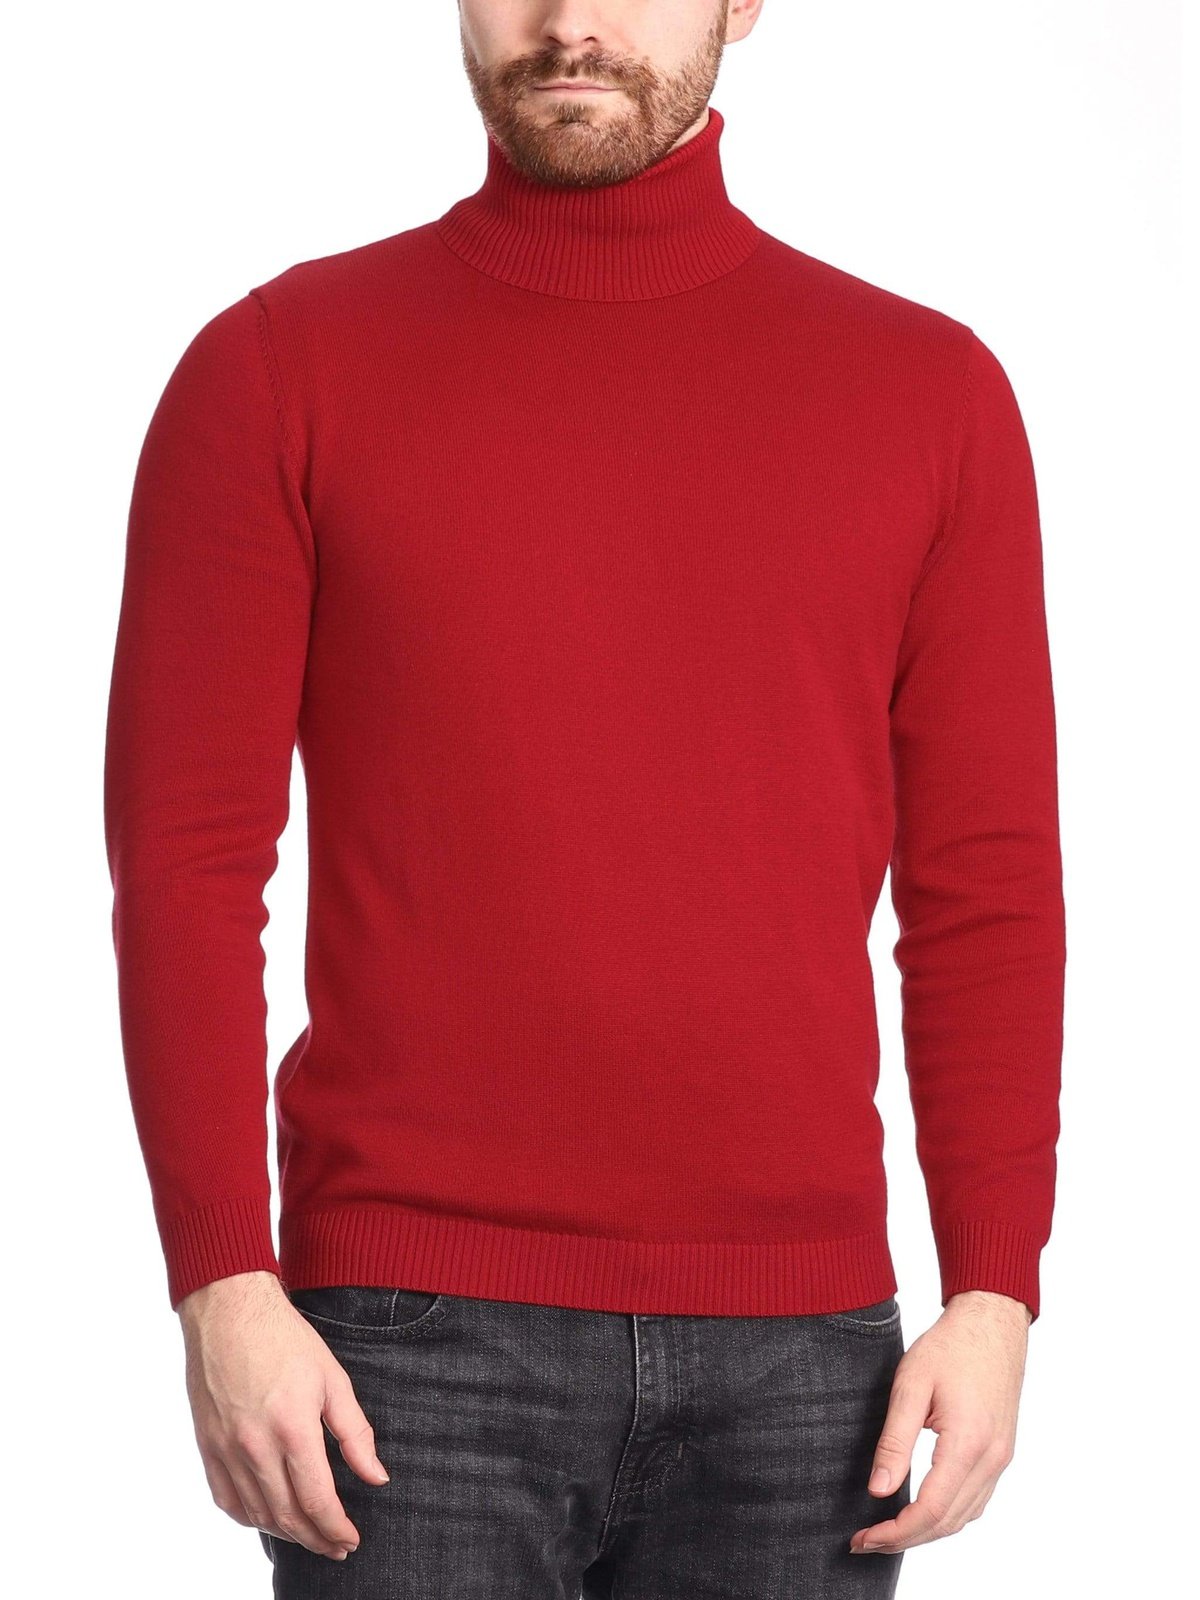 Arthur Black Default Category Migrated Arthur Black Men's Solid Red Pullover Cotton Blend Turtleneck Sweater Shirt